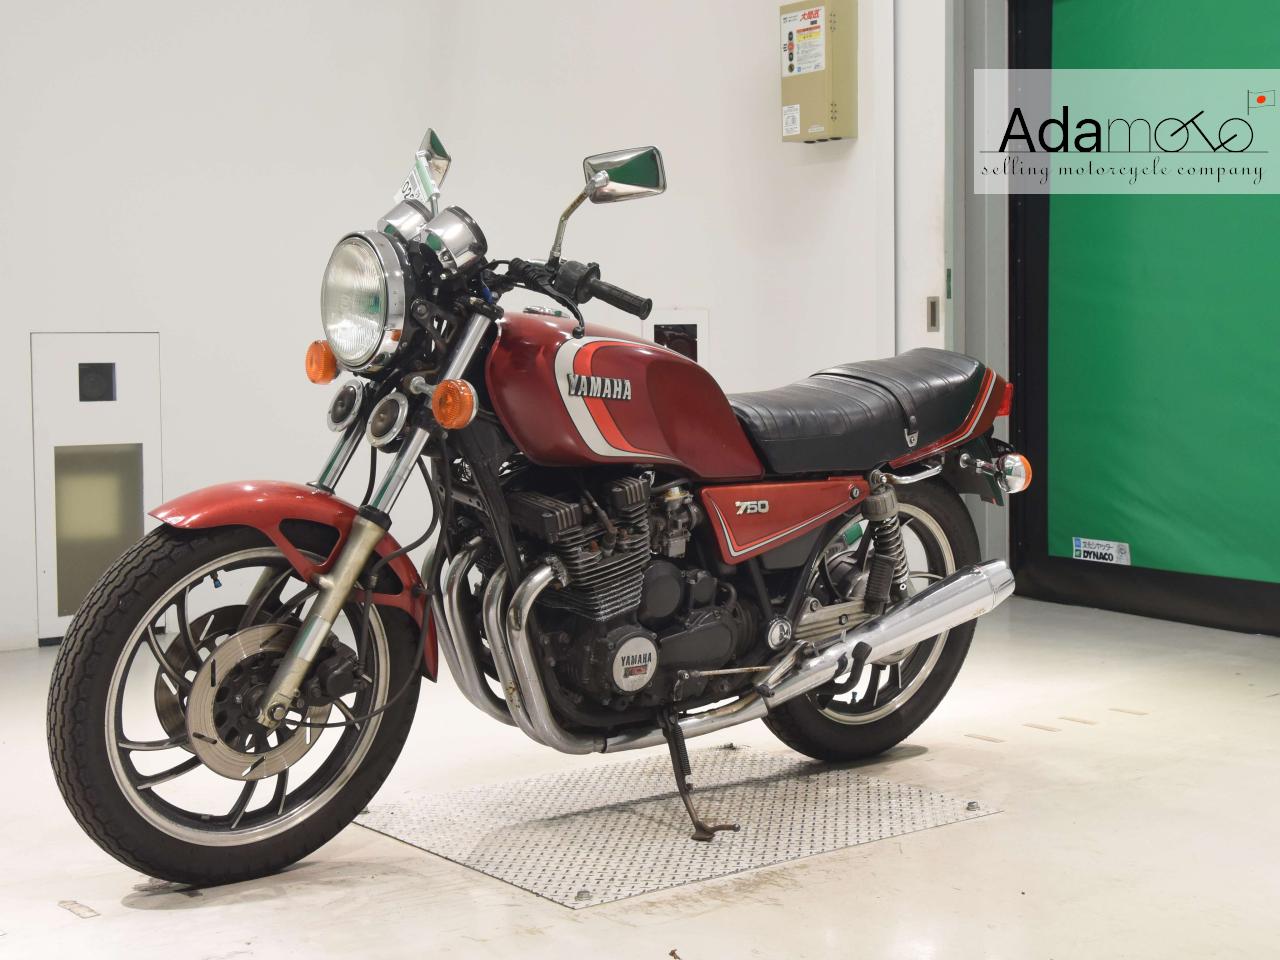 Yamaha XJ750E - Adamoto - Motorcycles from Japan